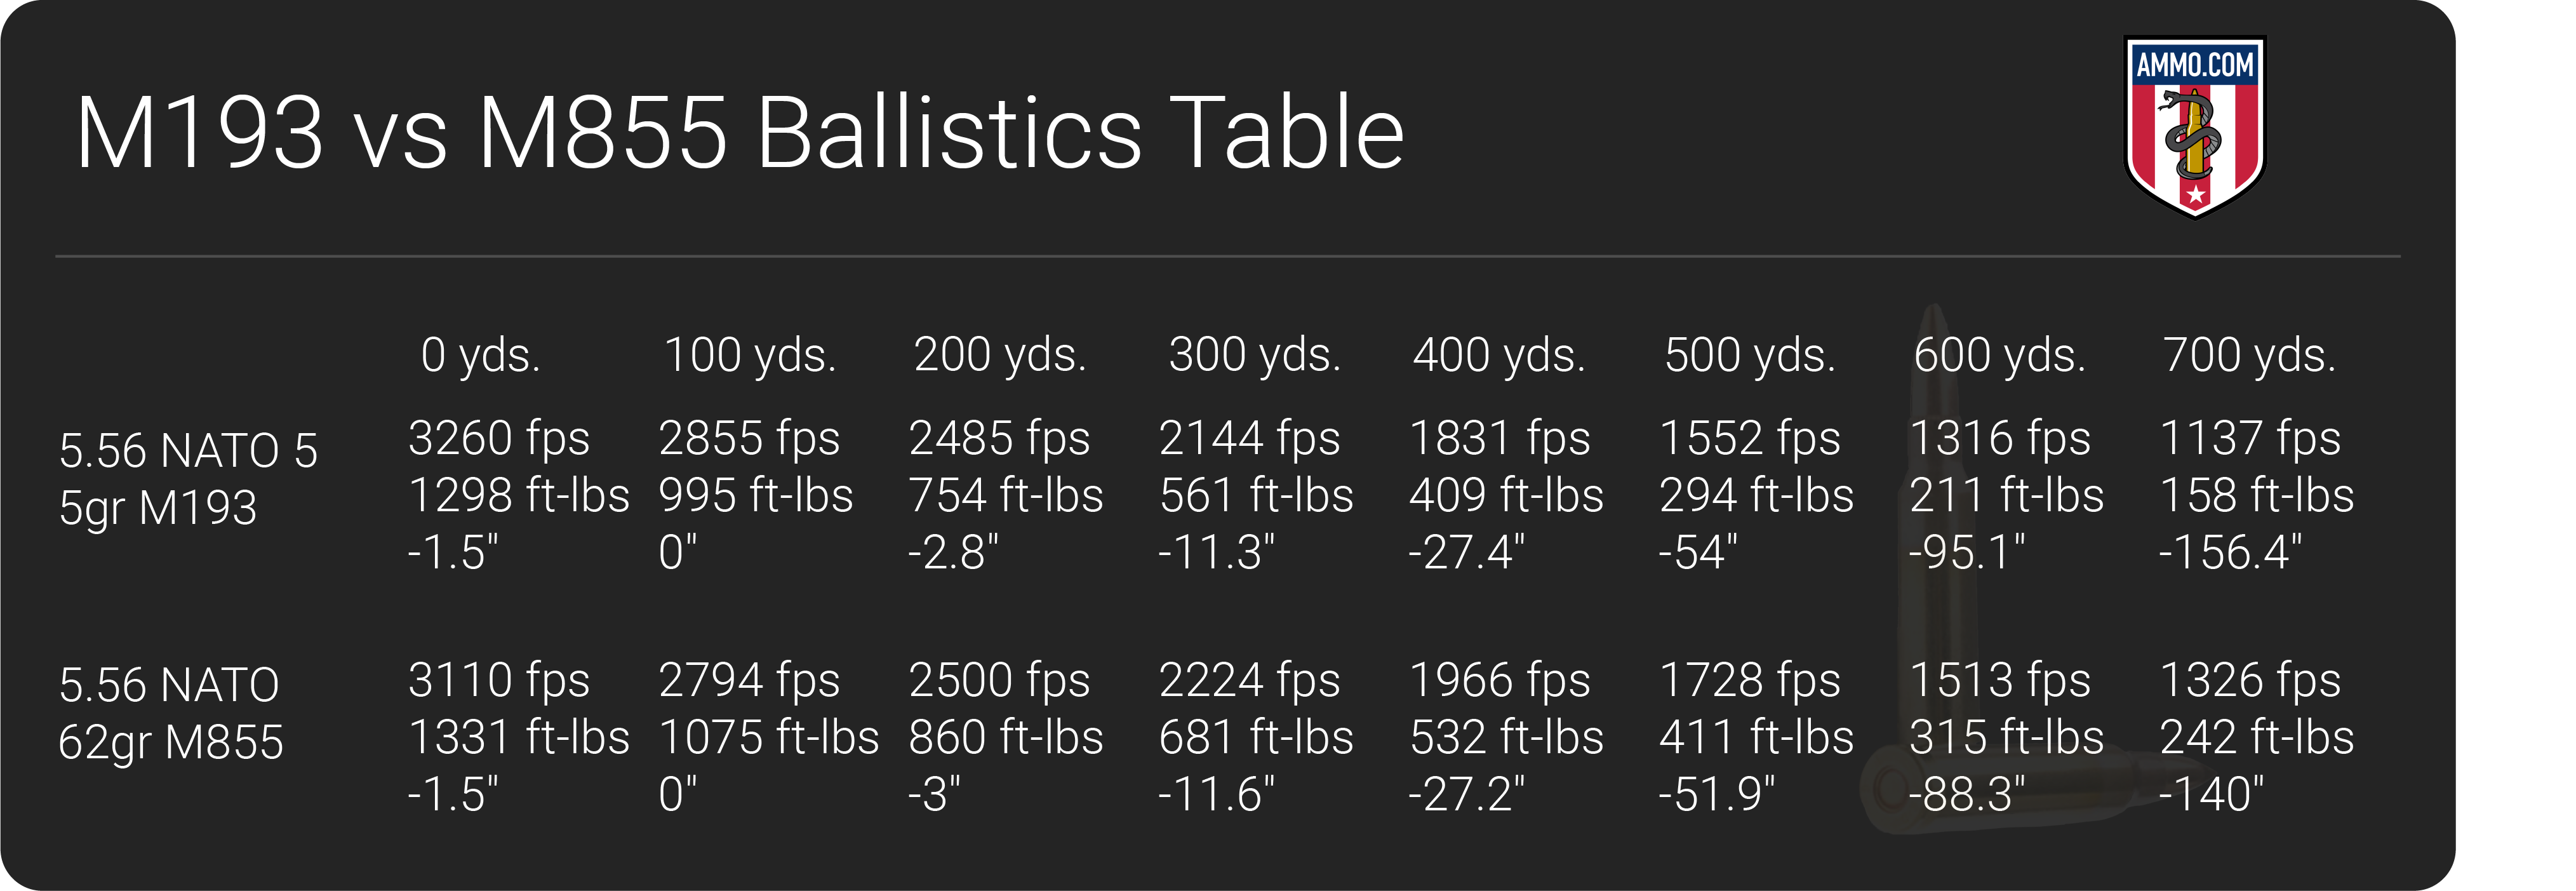 M193 vs M855 ballistics table